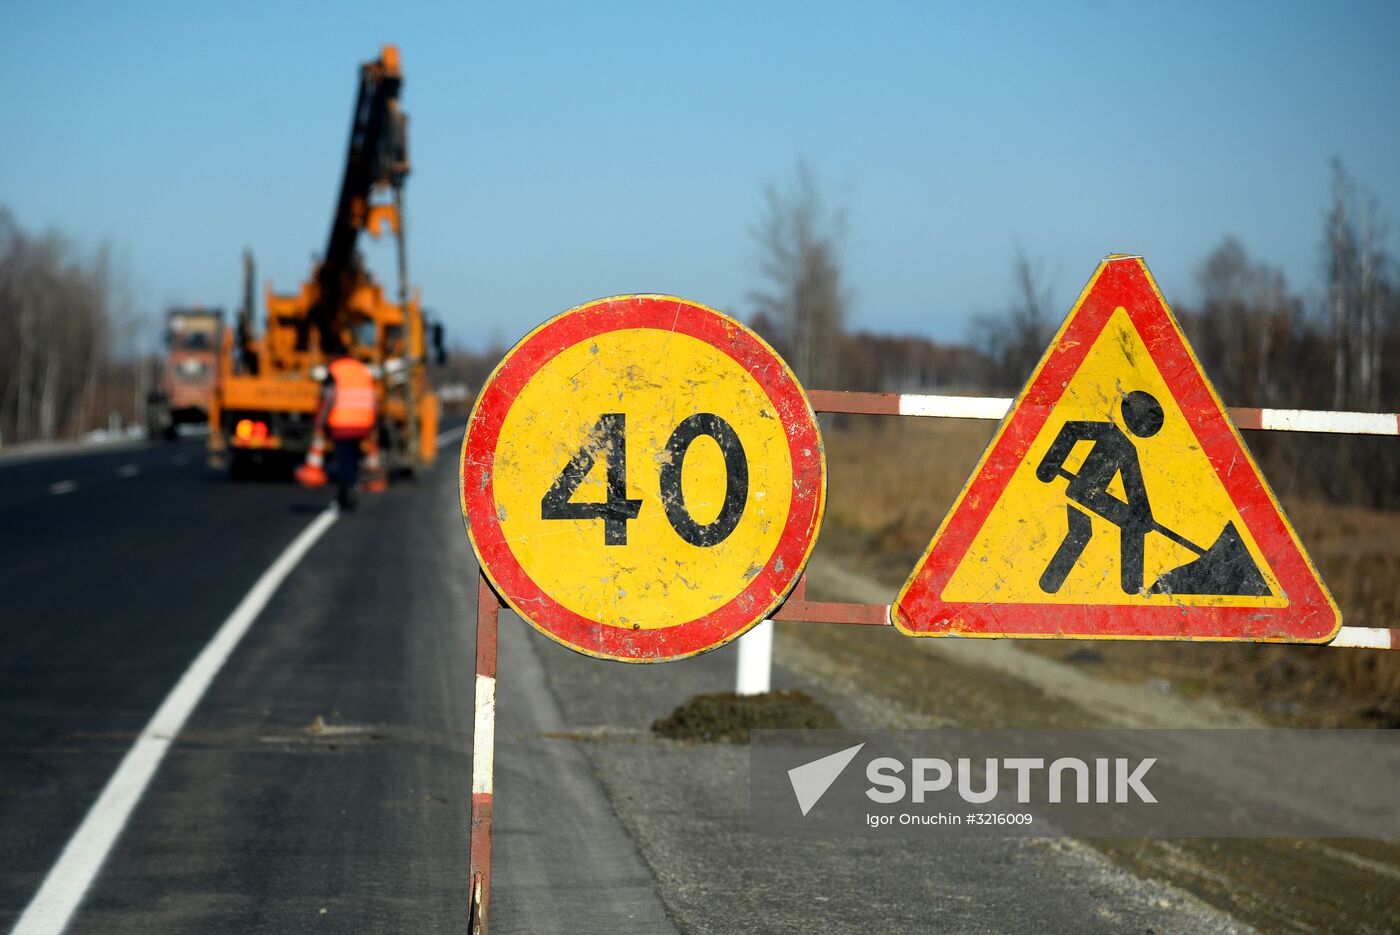 A-375 "Vostok" Khabarovsk - Nakhodka federal highway under major repair